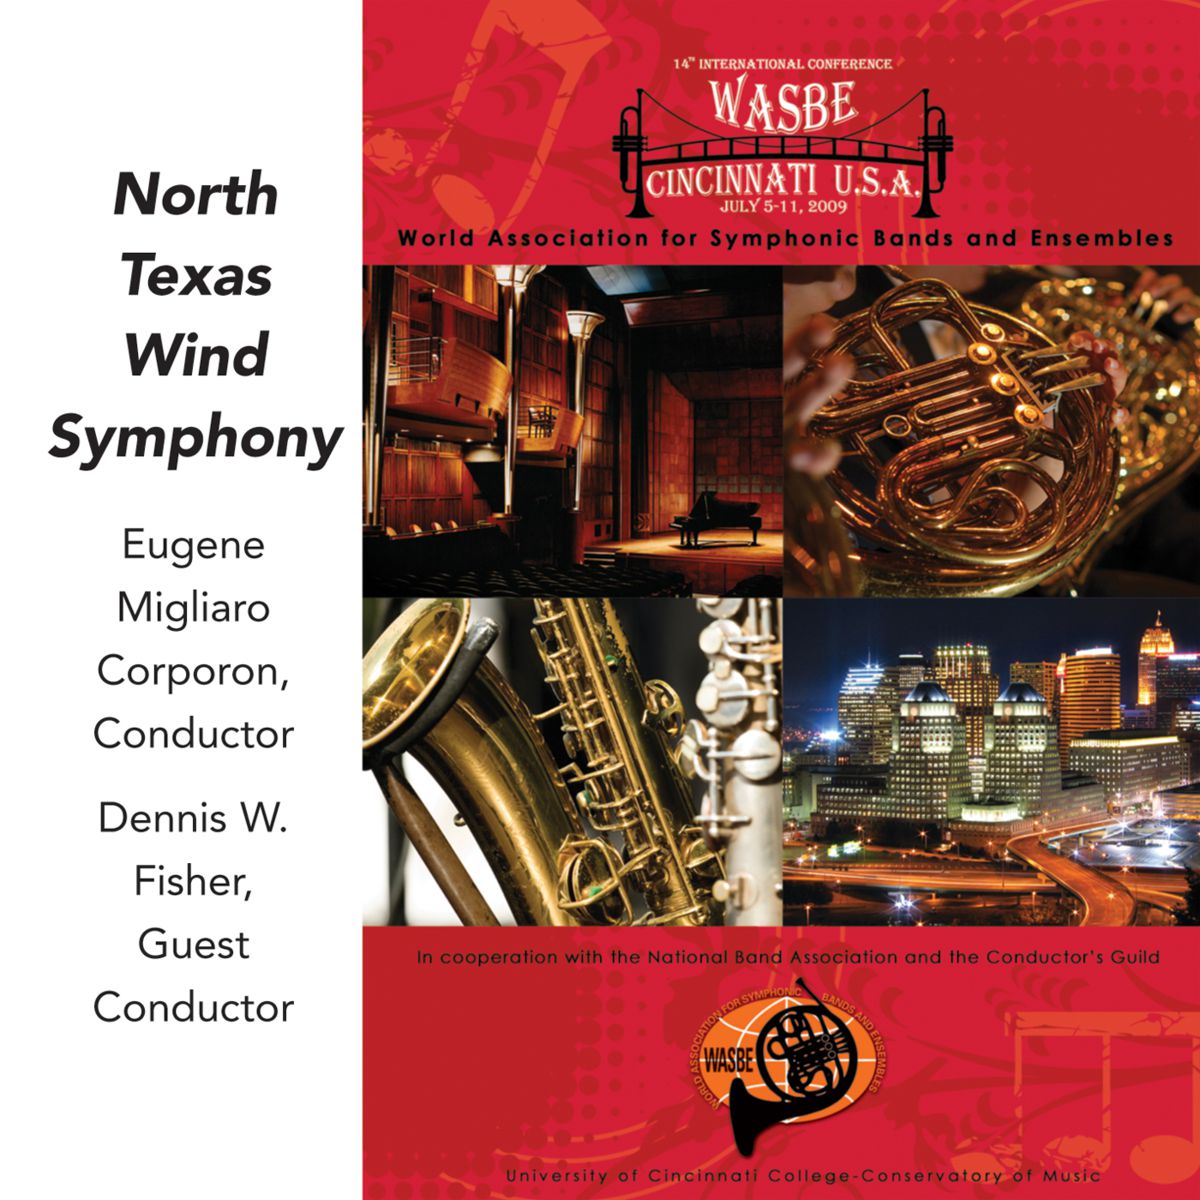 2009 WASBE Cincinnati, USA: North Texas Wind Symphony - click here